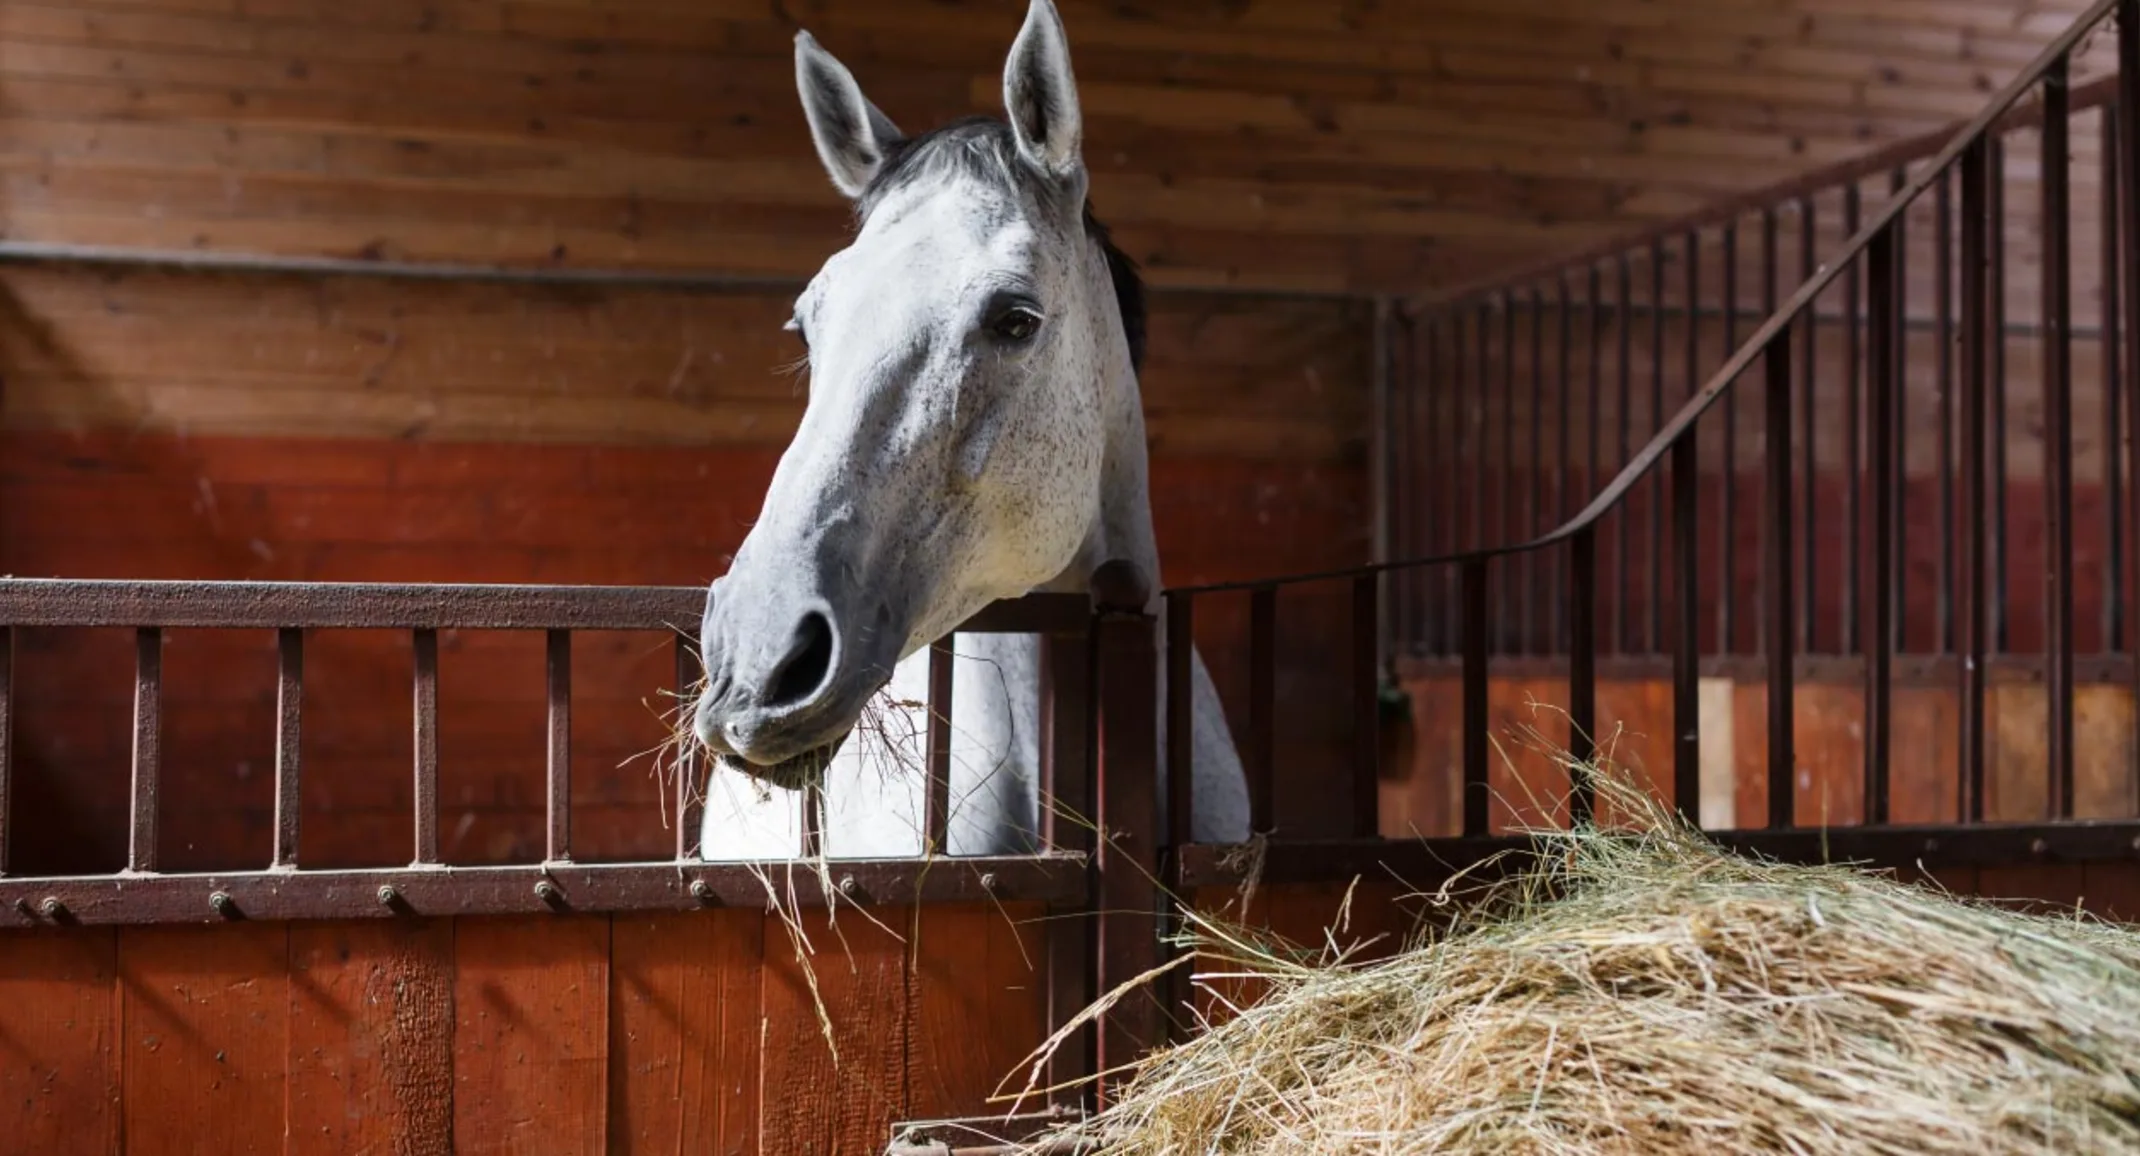 Horse Eating Hay in Barn